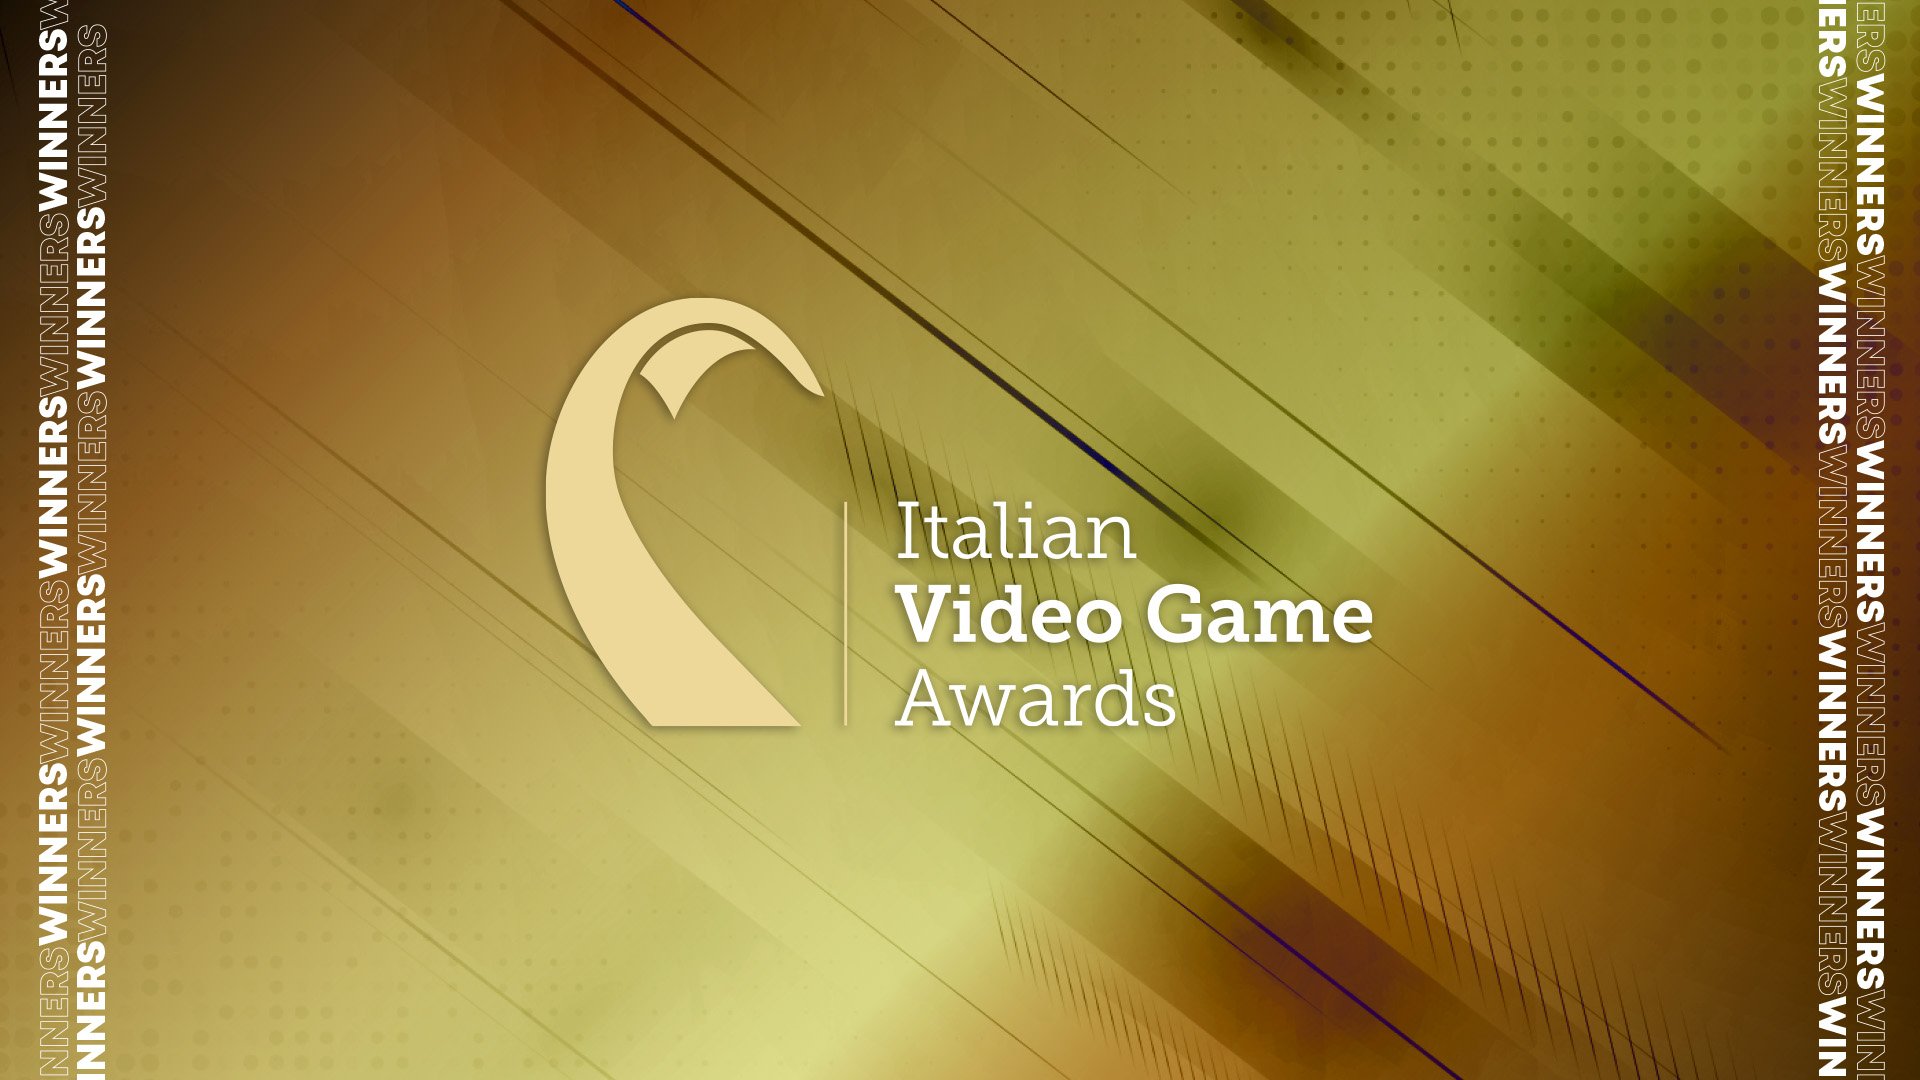 Italian Video Game Awards 2024